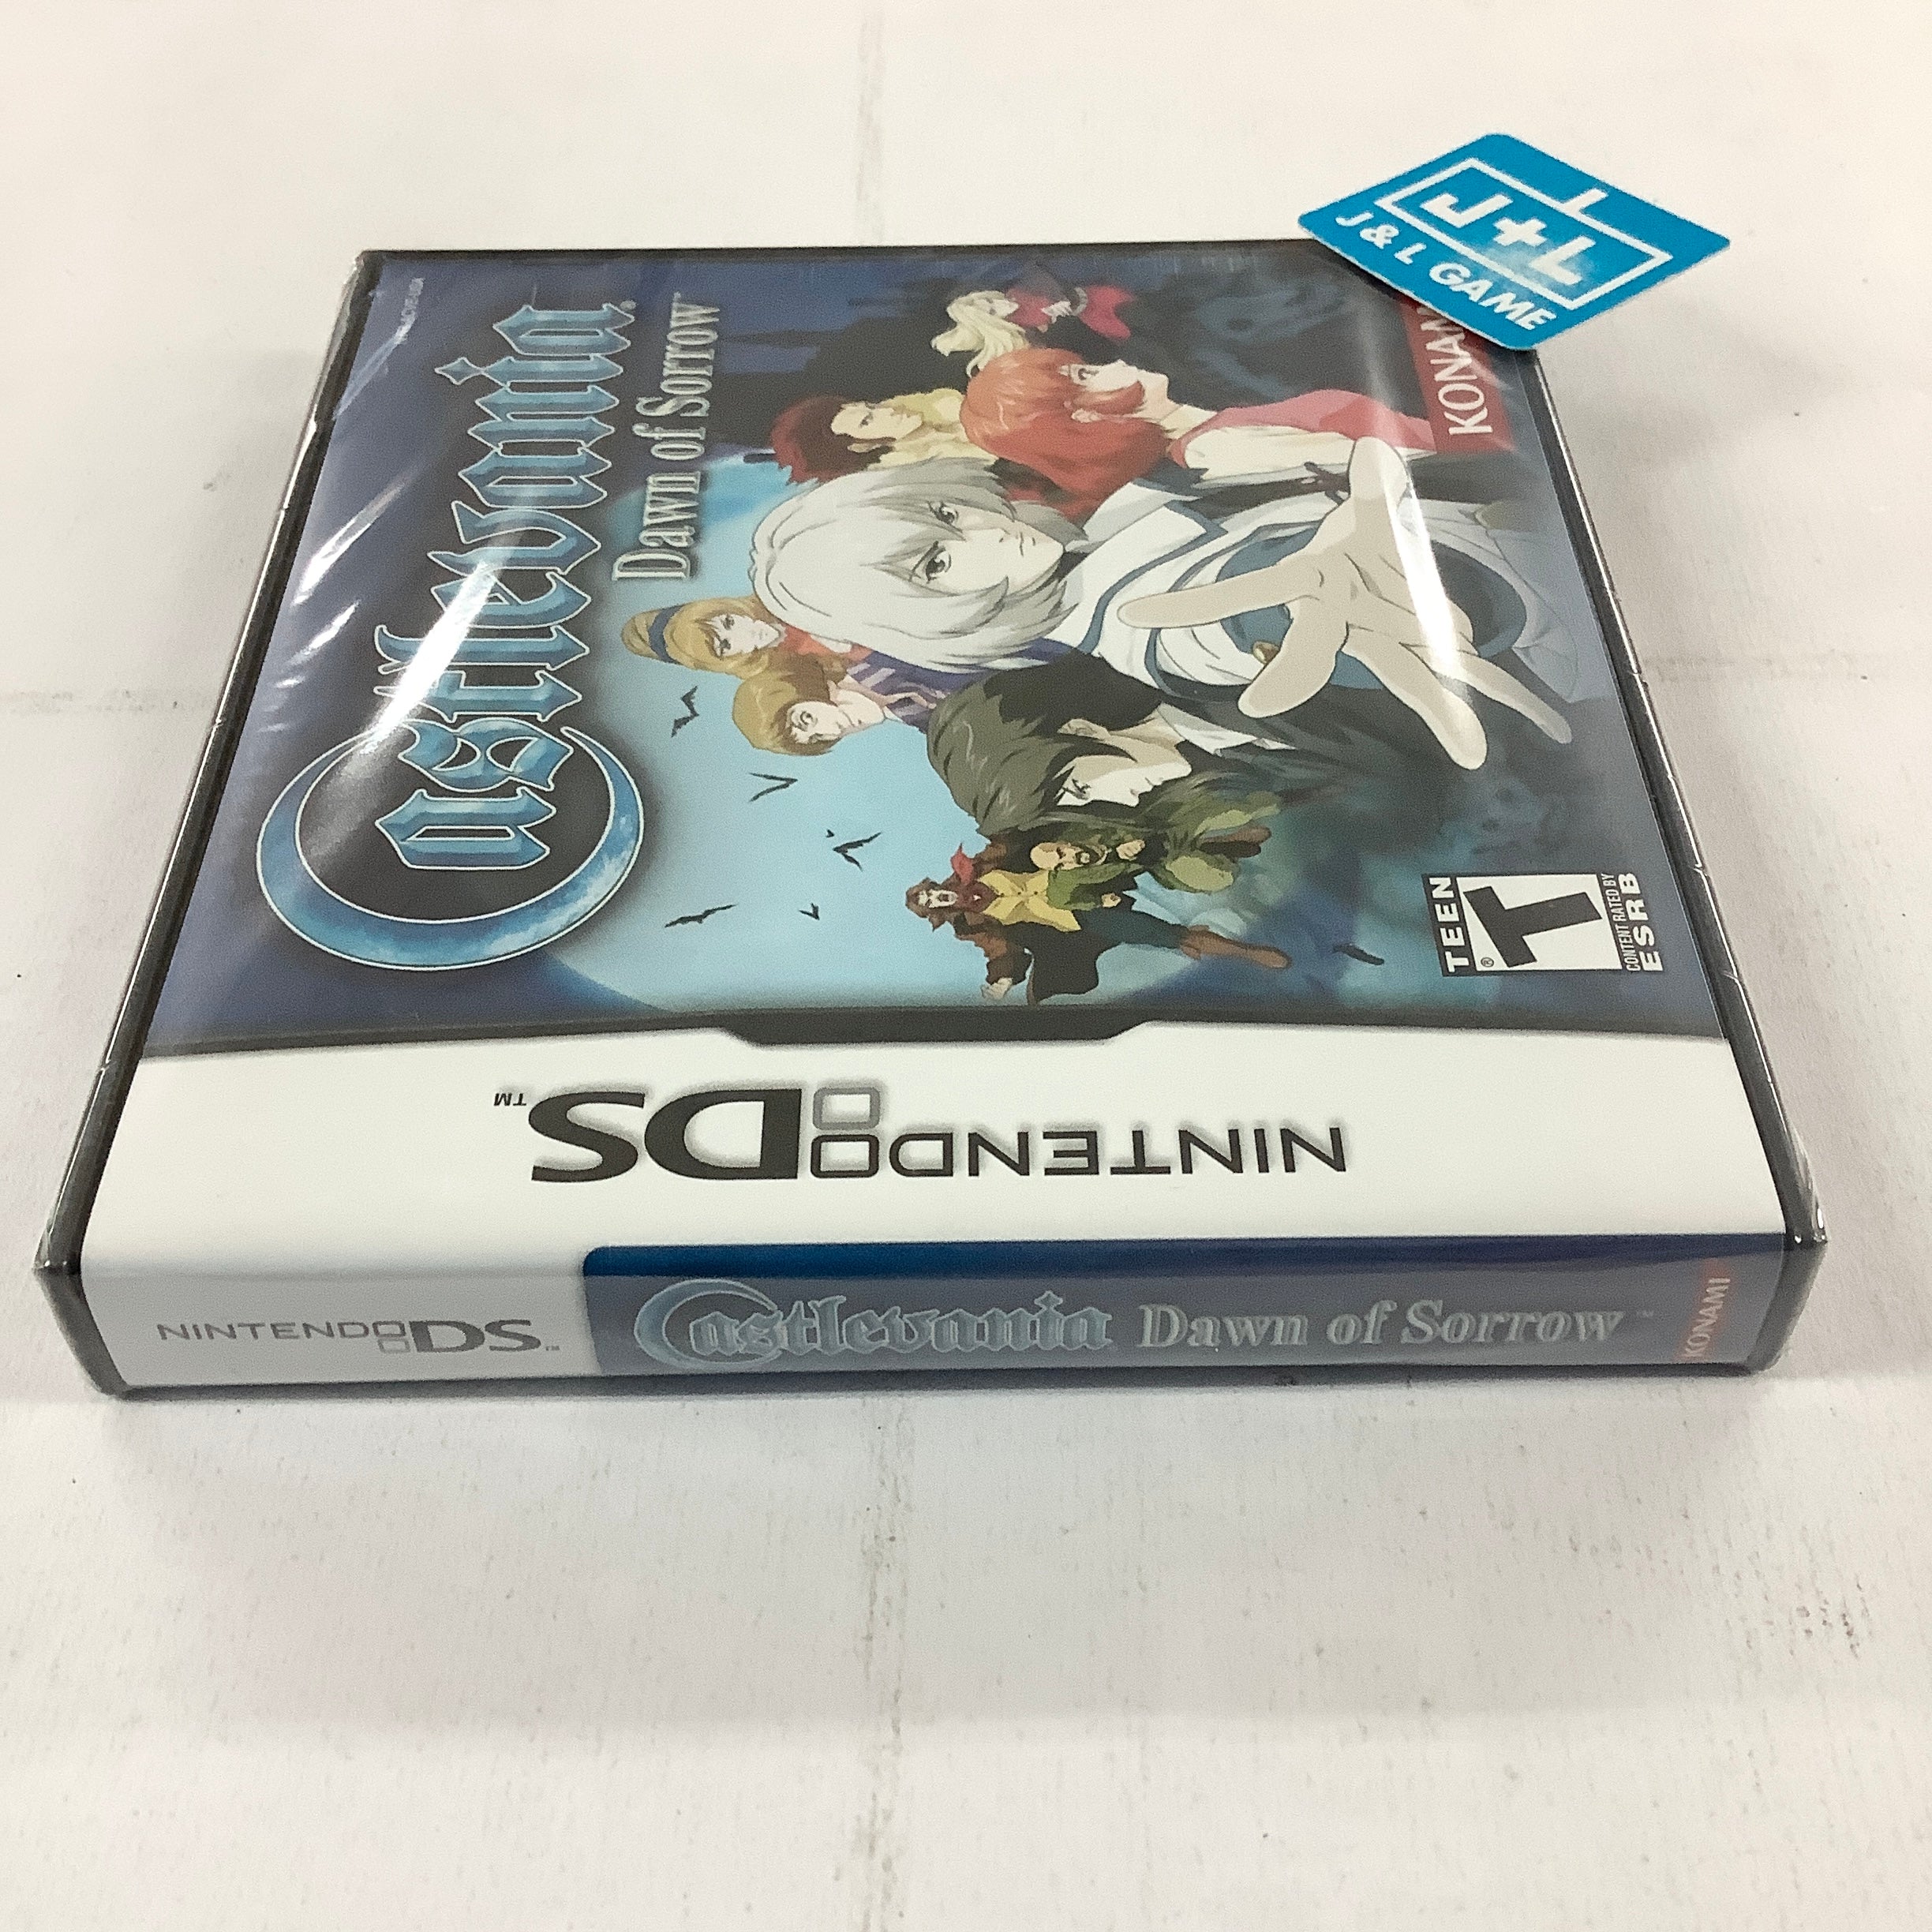 Castlevania: Dawn of Sorrow - (NDS) Nintendo DS Video Games Konami   